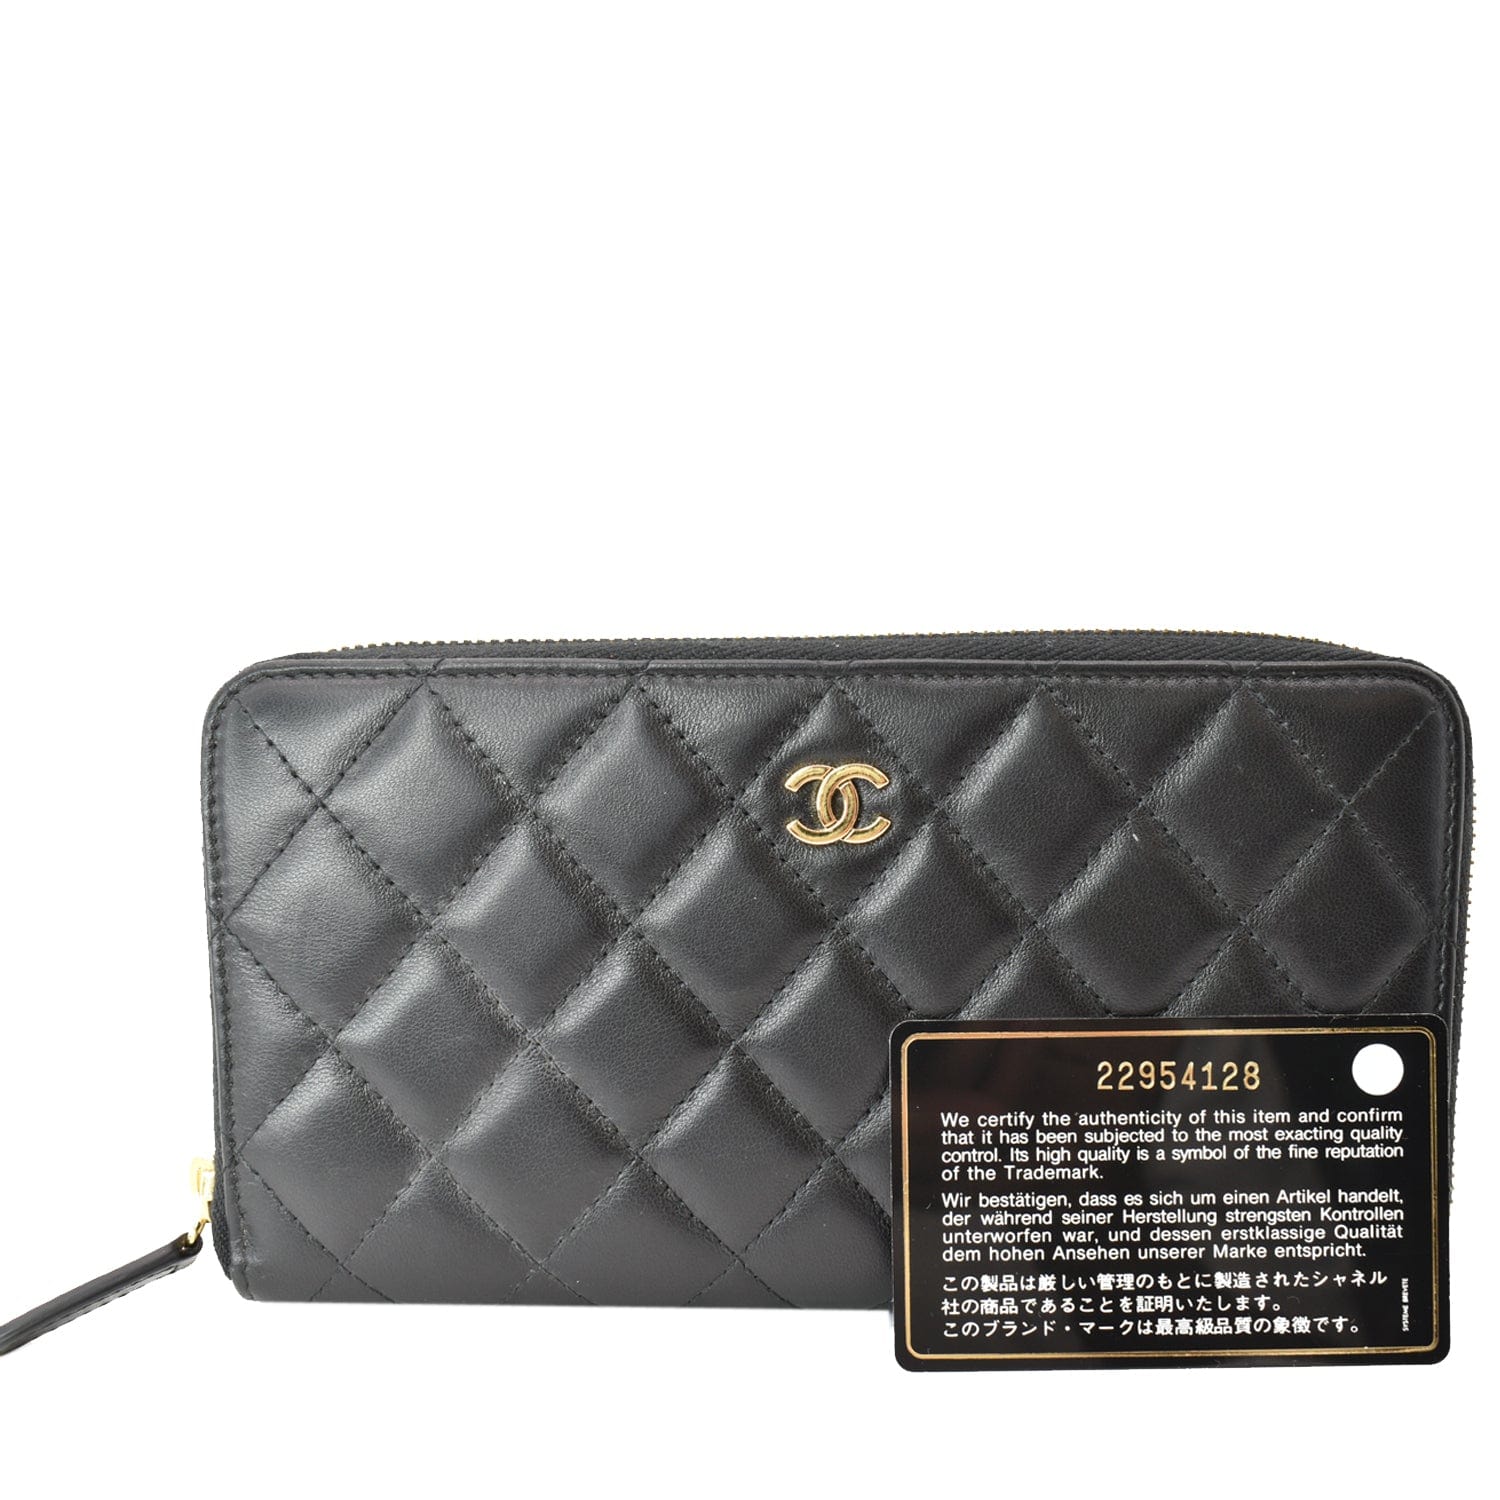 Chanel Medium Zip Around Wallet Purse in Iridescent Black Caviar with Shiny  Silver Ruthenium Hardware  SOLD